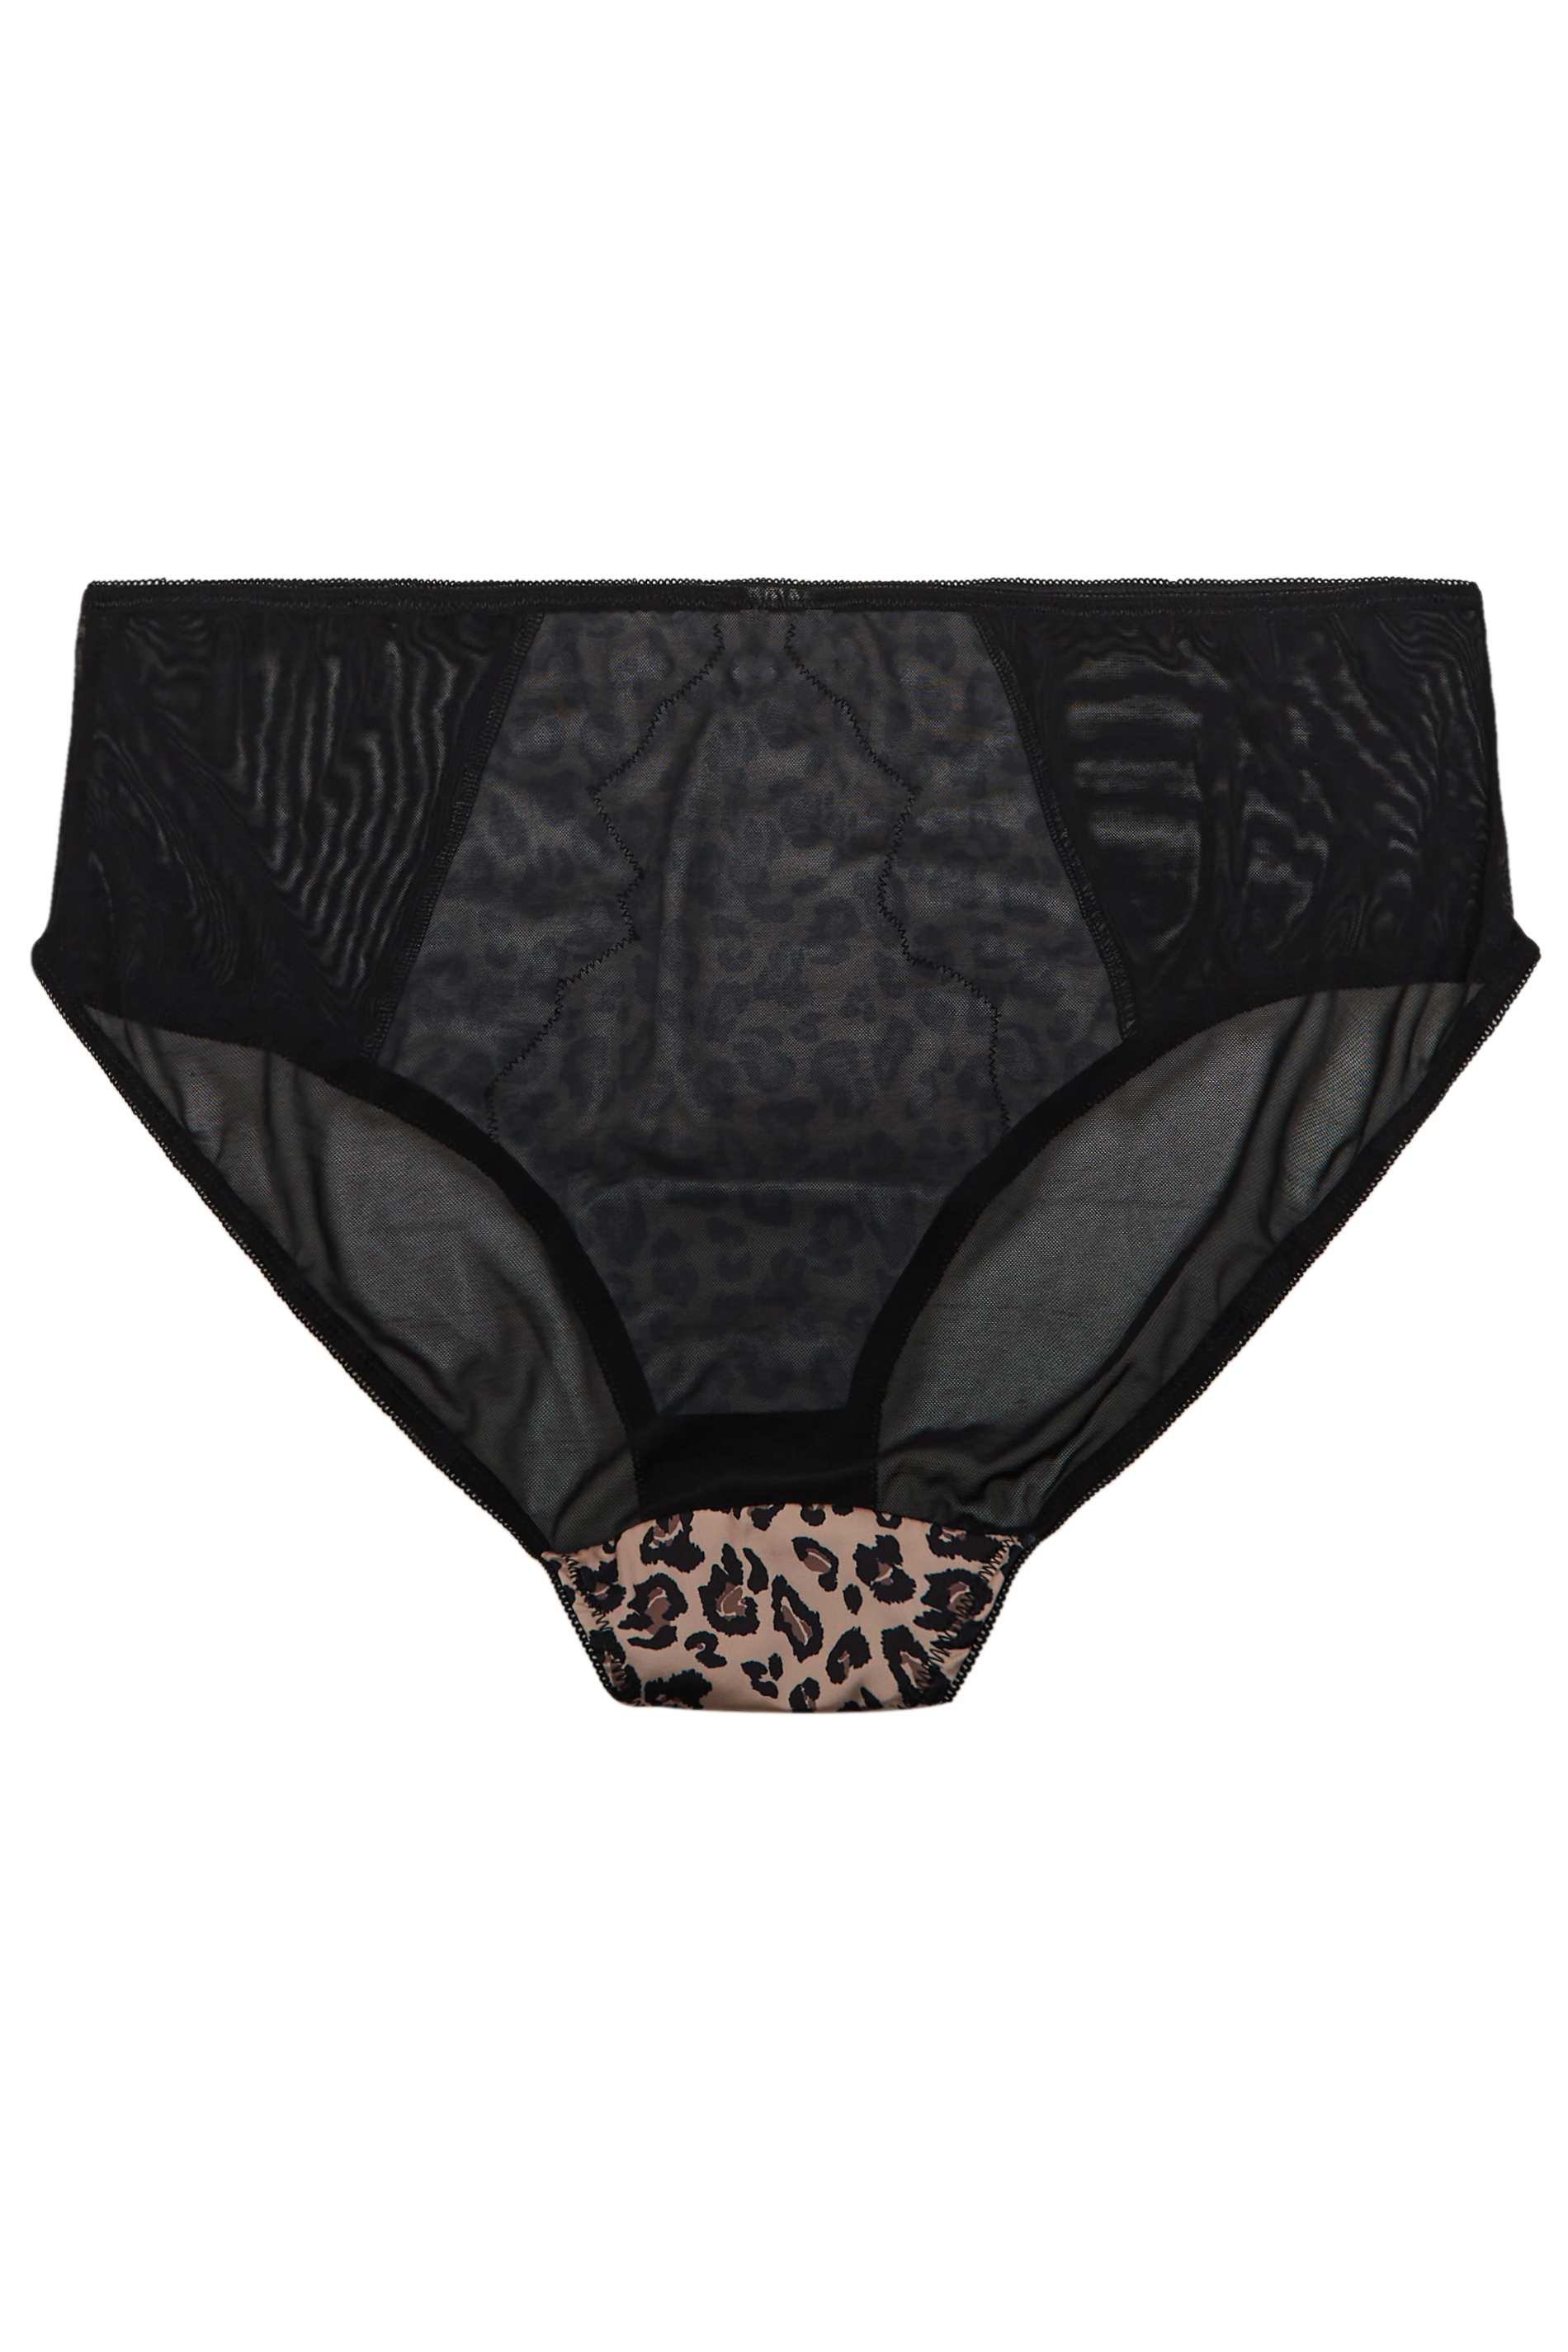 Leopard Print High Waist Panty Silk Charmesuse Sheer Black Vintage